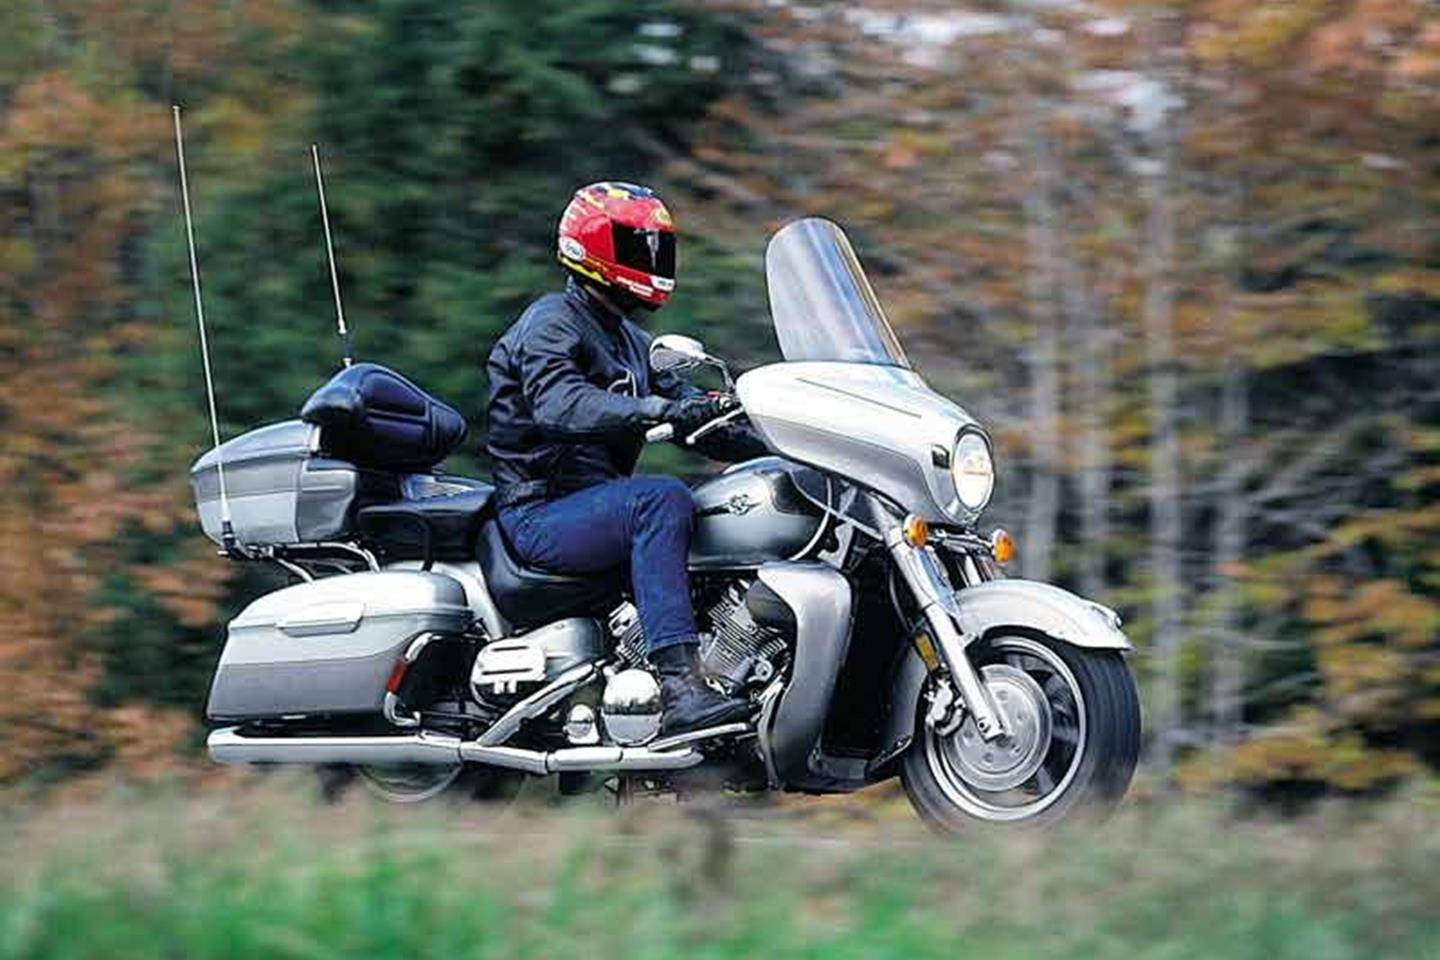 Yamaha xvz1300tf royal star venture + yamaha xvz1300ct royal star tour deluxe: review, history, specs - bikeswiki.com, japanese motorcycle encyclopedia